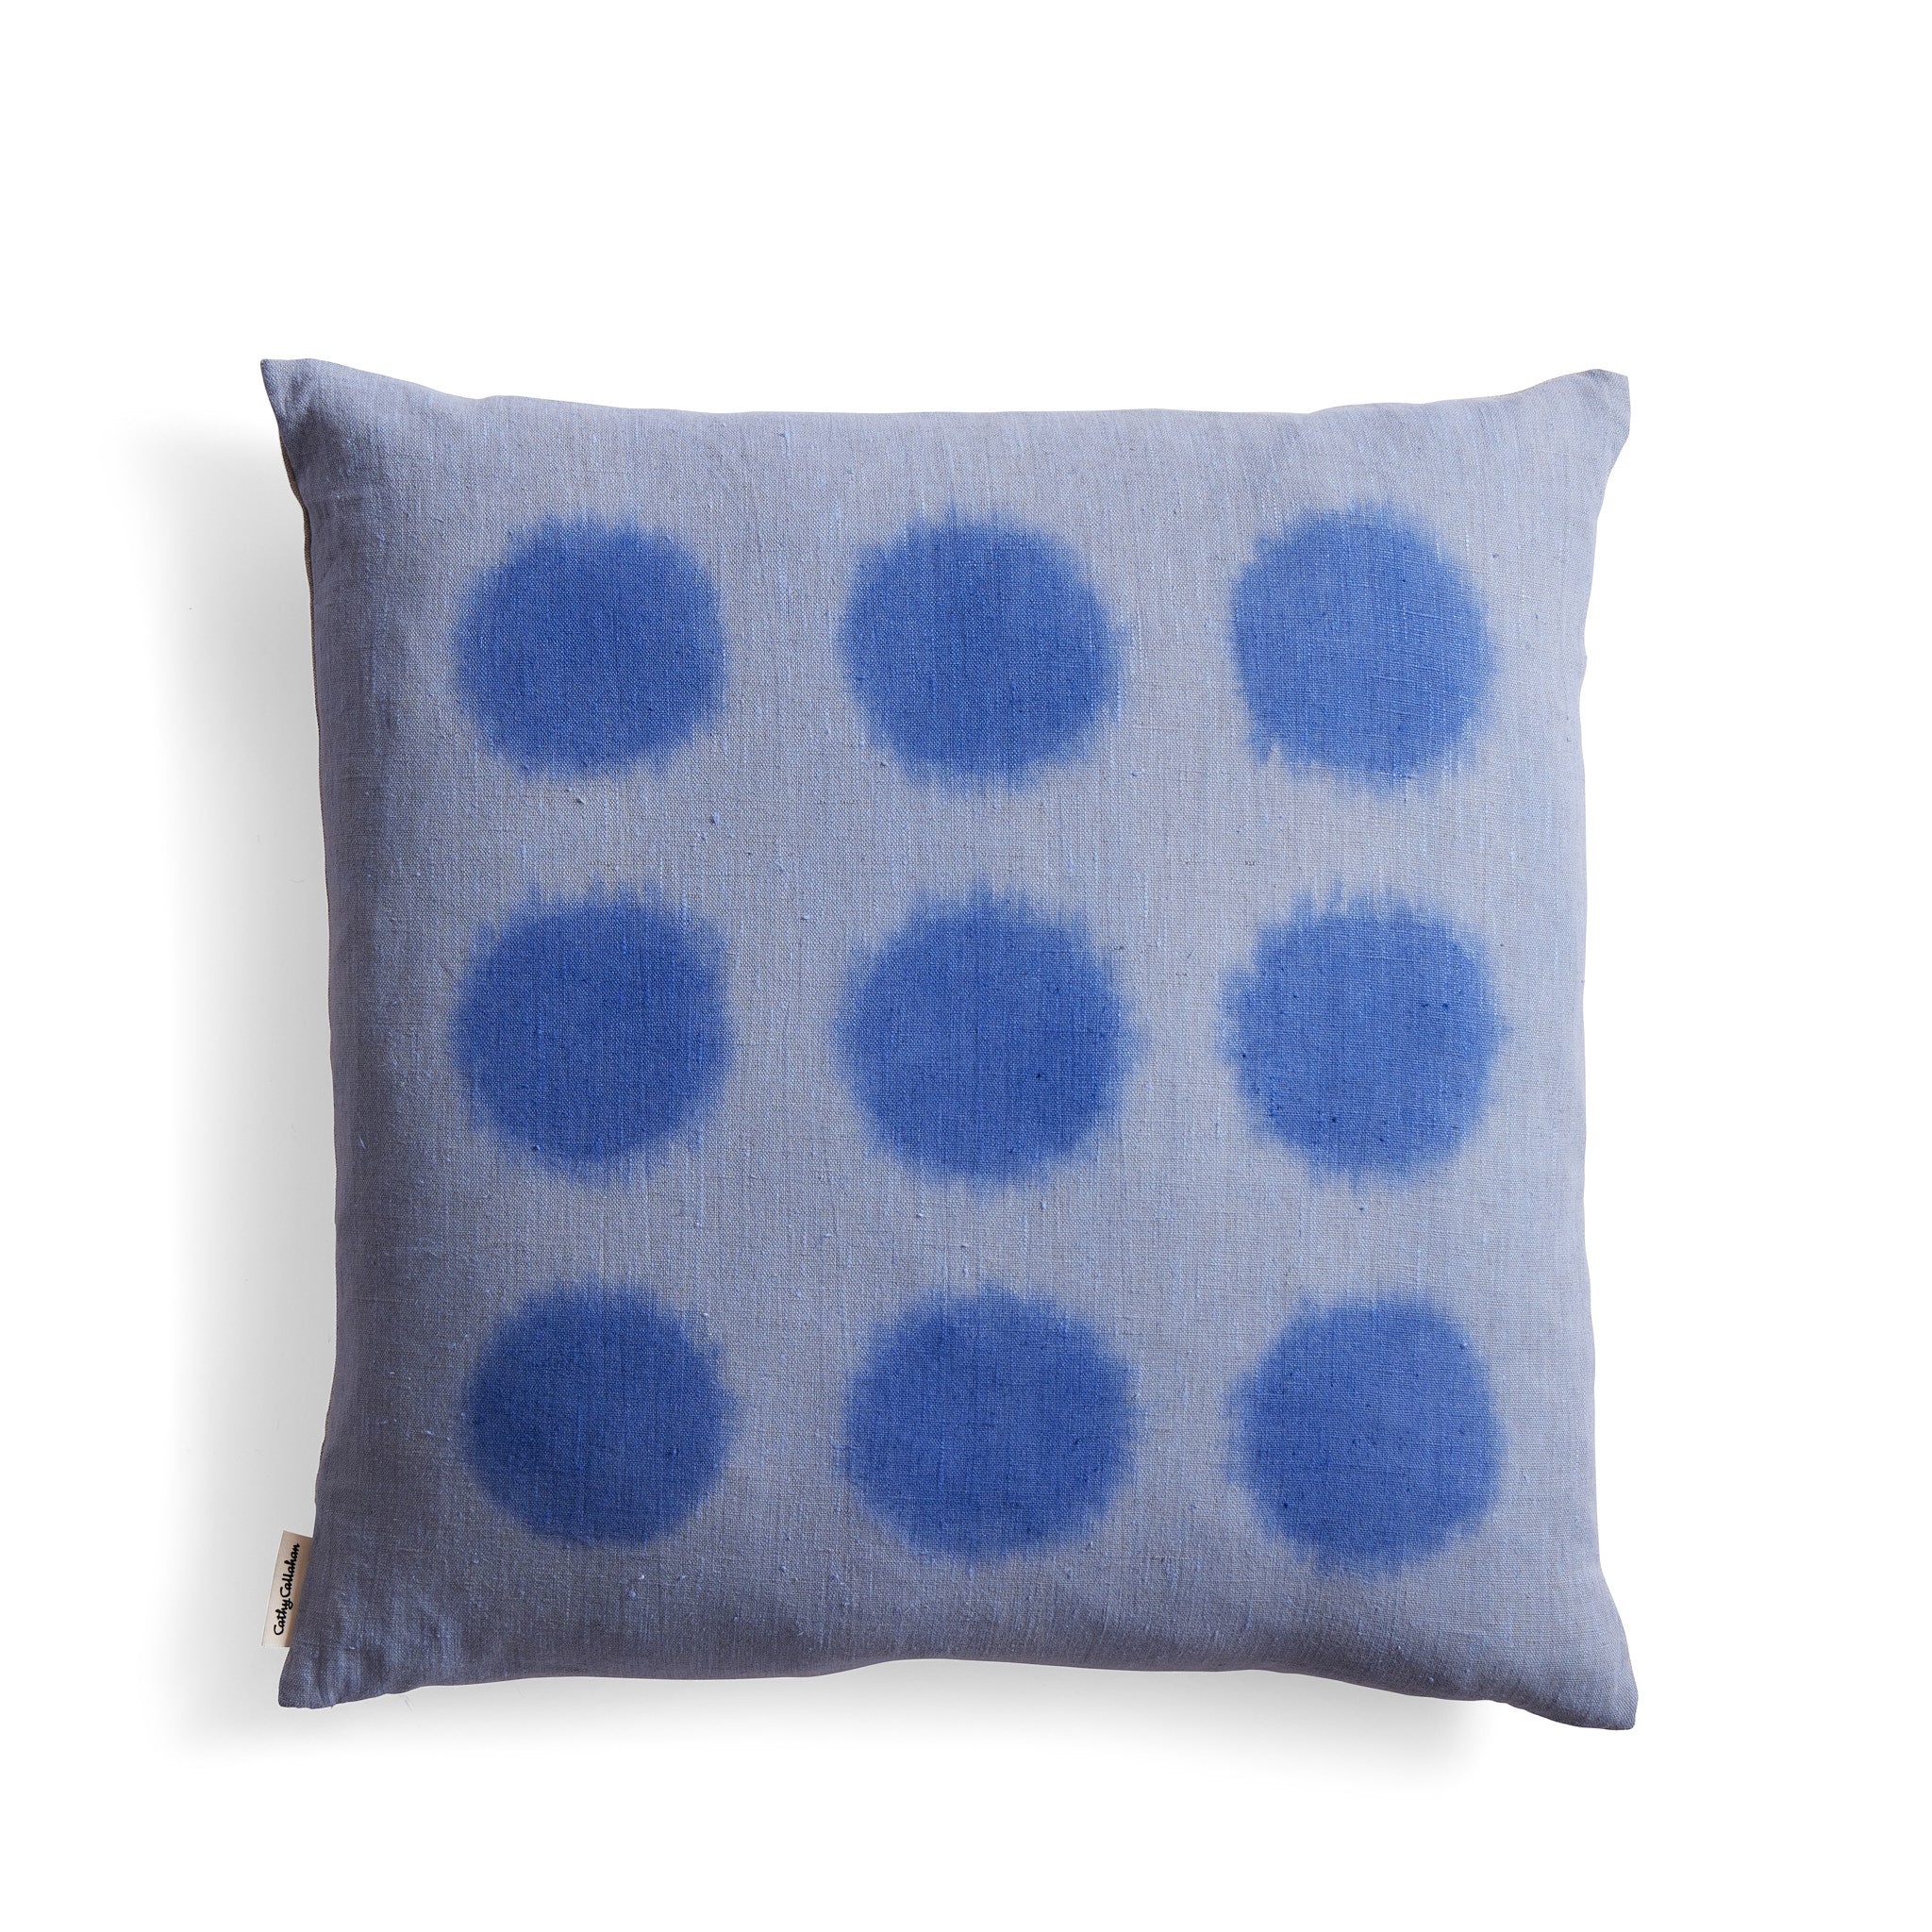 Hand-Painted Linen Pillow in Ultramarine Zoom Image 1